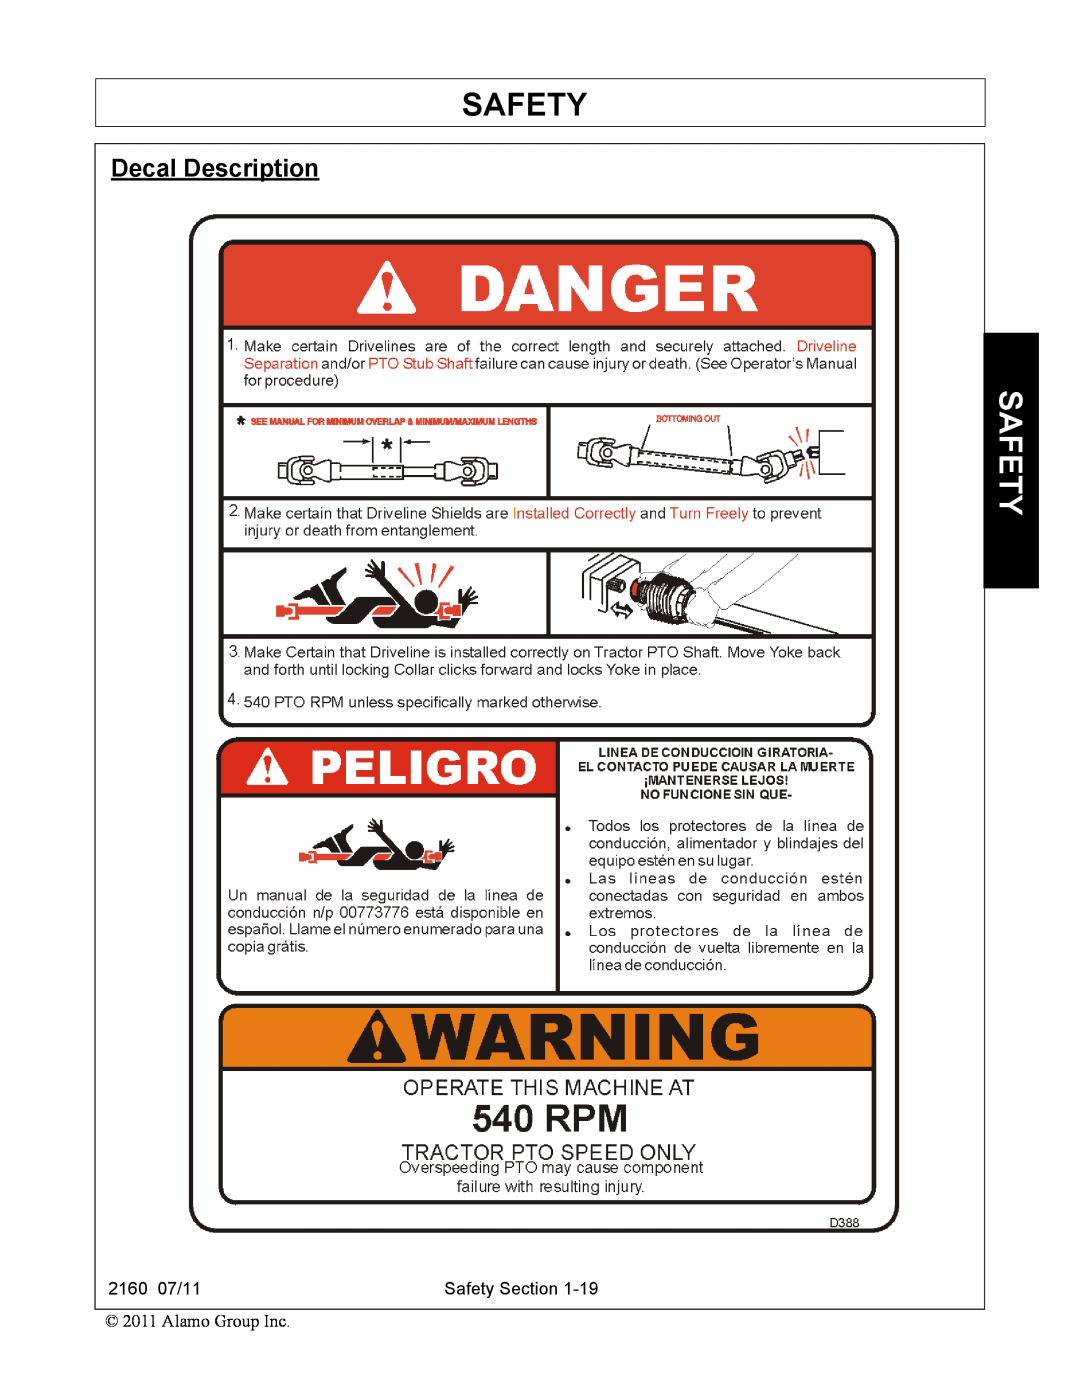 Servis-Rhino 2160 manual Decal Description, Safety 